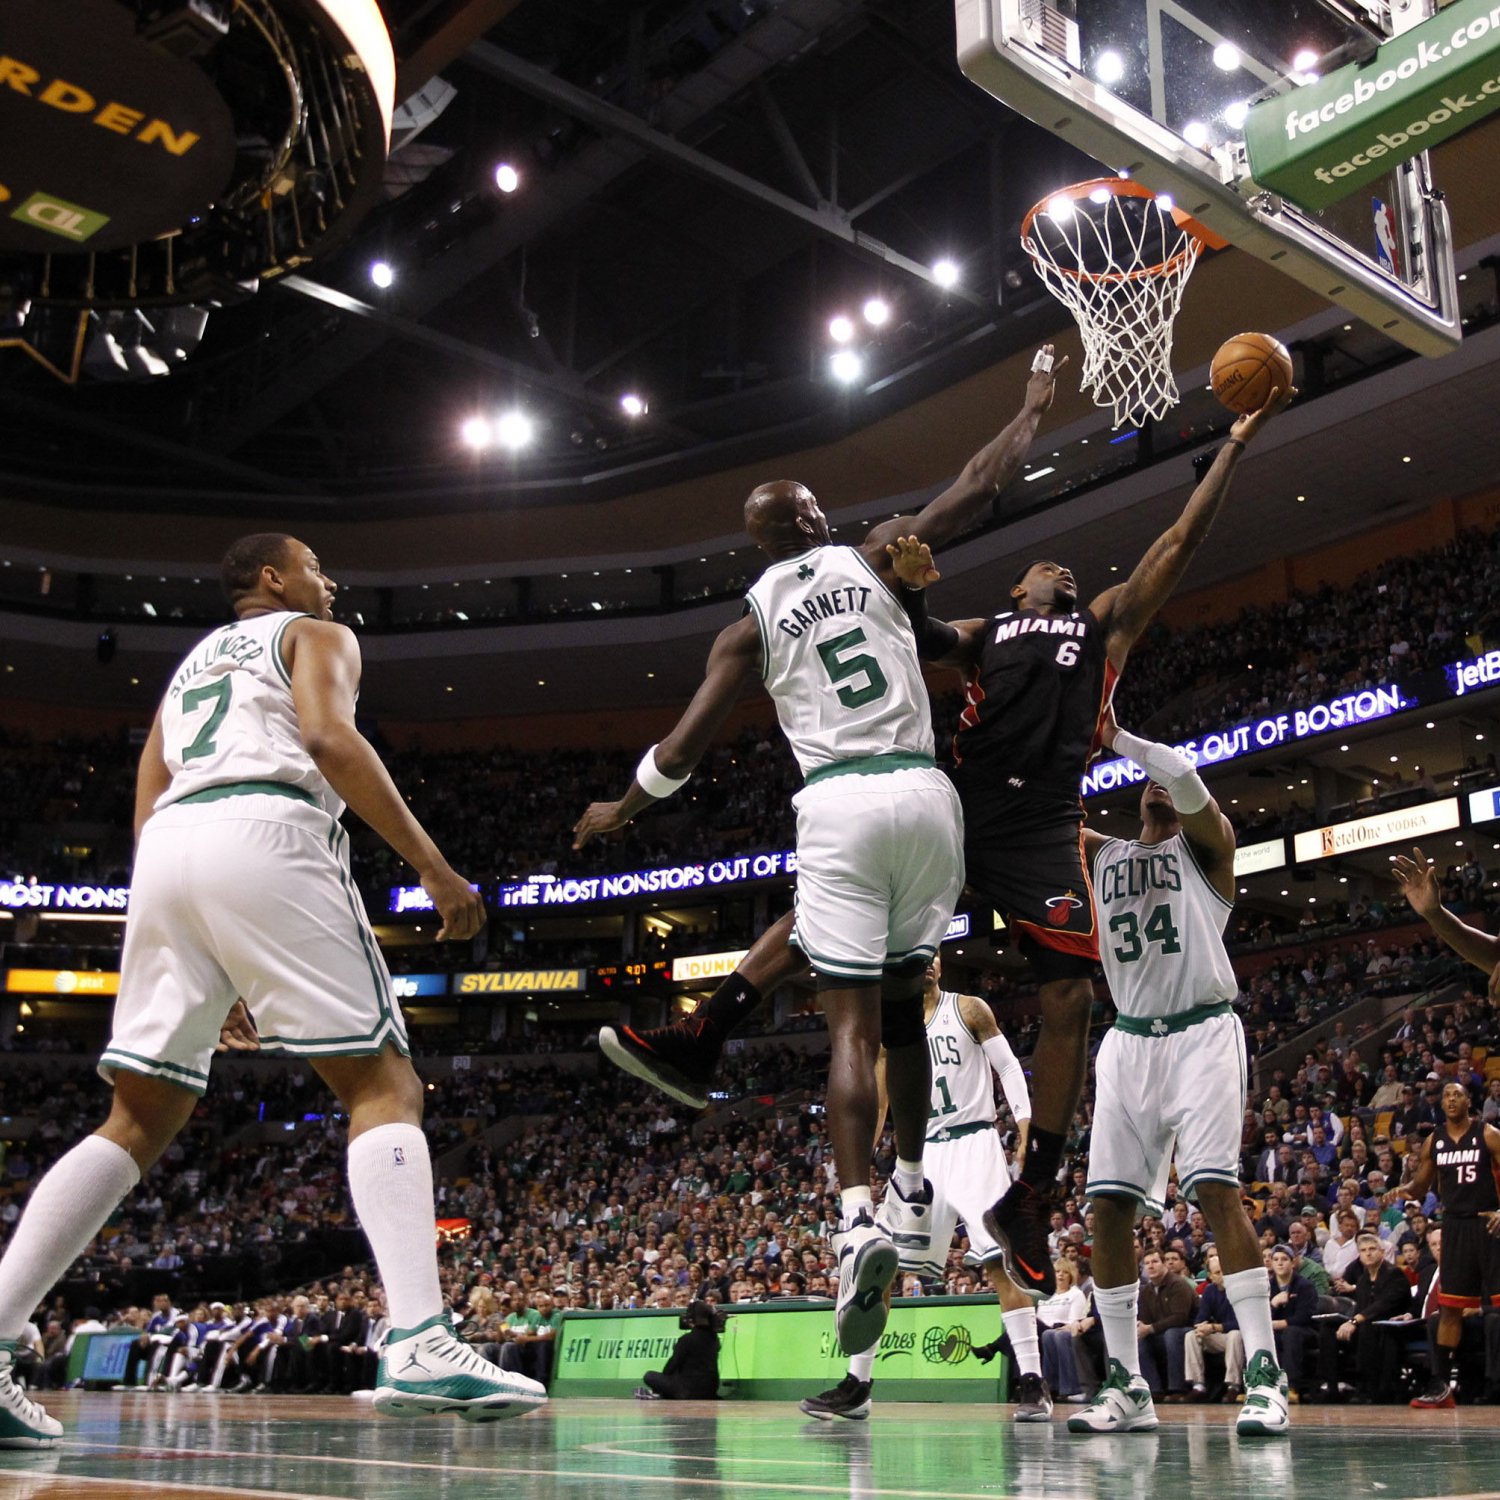 Miami Heat vs. Boston Celtics Preview, Analysis and Predictions